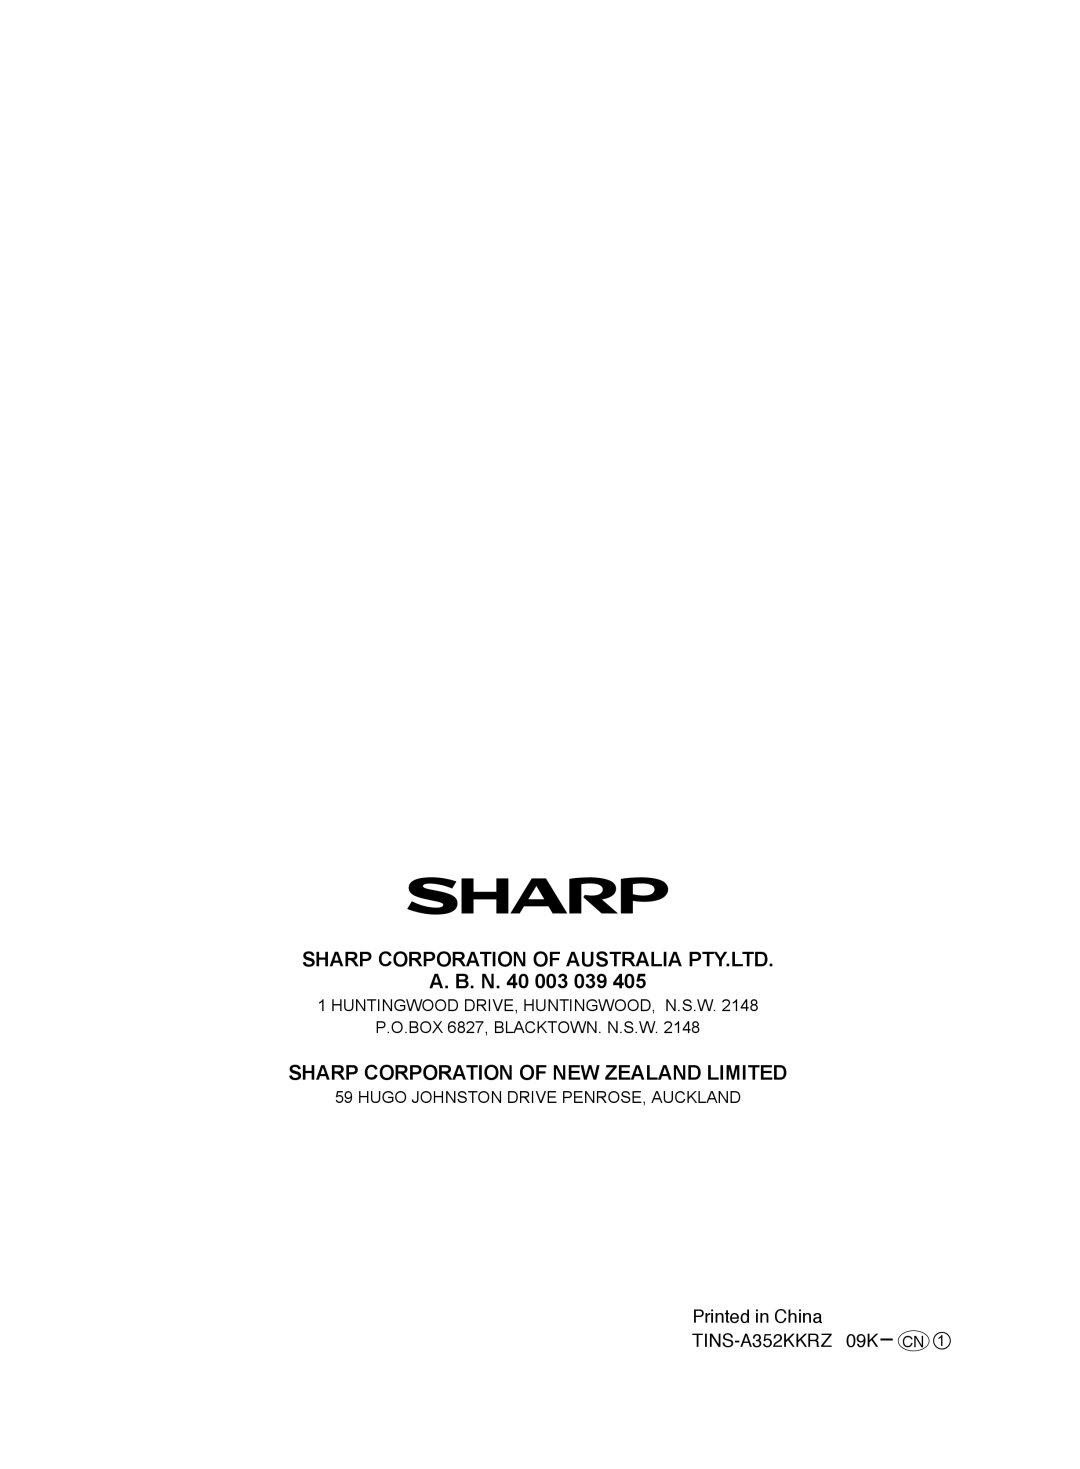 Sharp FU-W53J operation manual A. B. N, Sharp Corporation Of New Zealand Limited, Huntingwood Drive, Huntingwood, N.S.W 